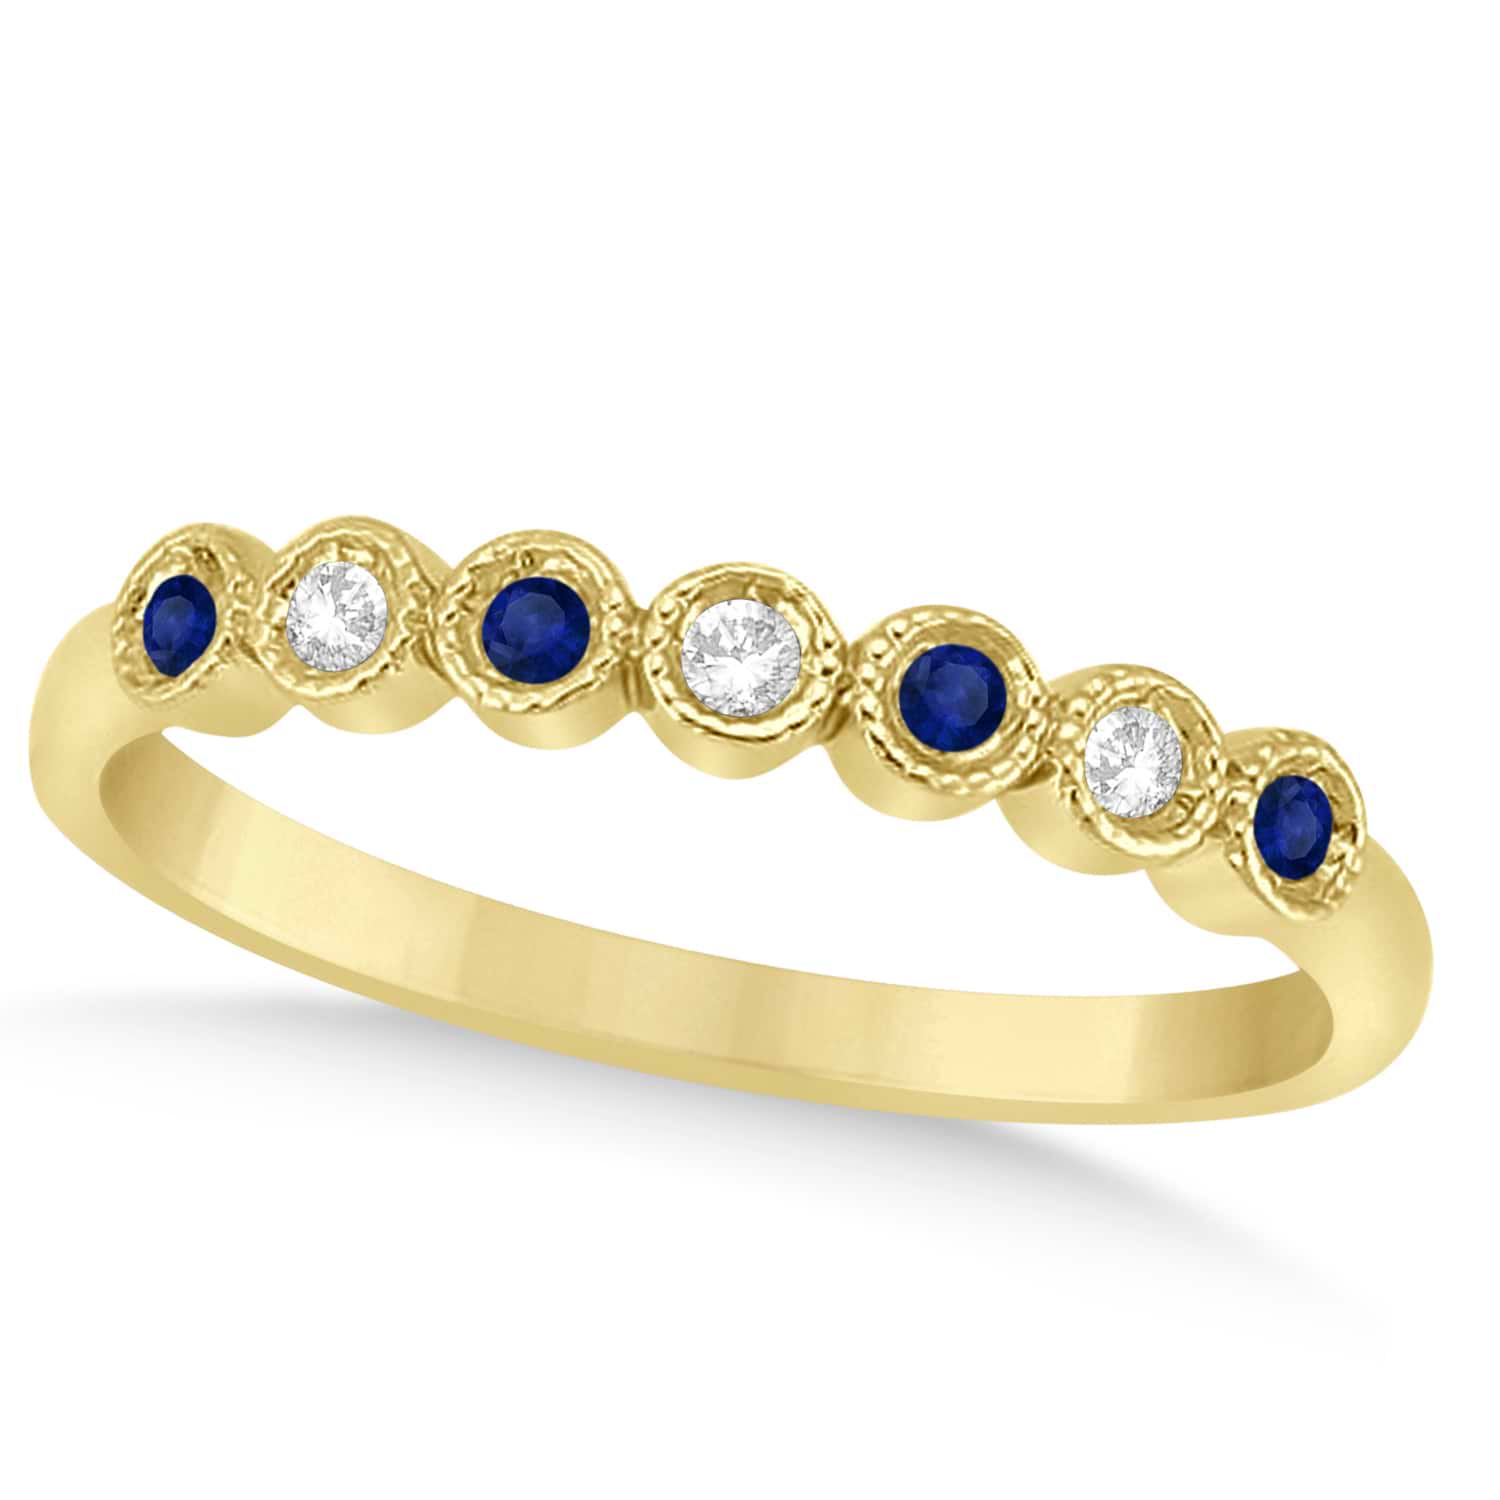 Blue Sapphire & Diamond Bezel Wedding Band 18k Yellow Gold 0.10ct